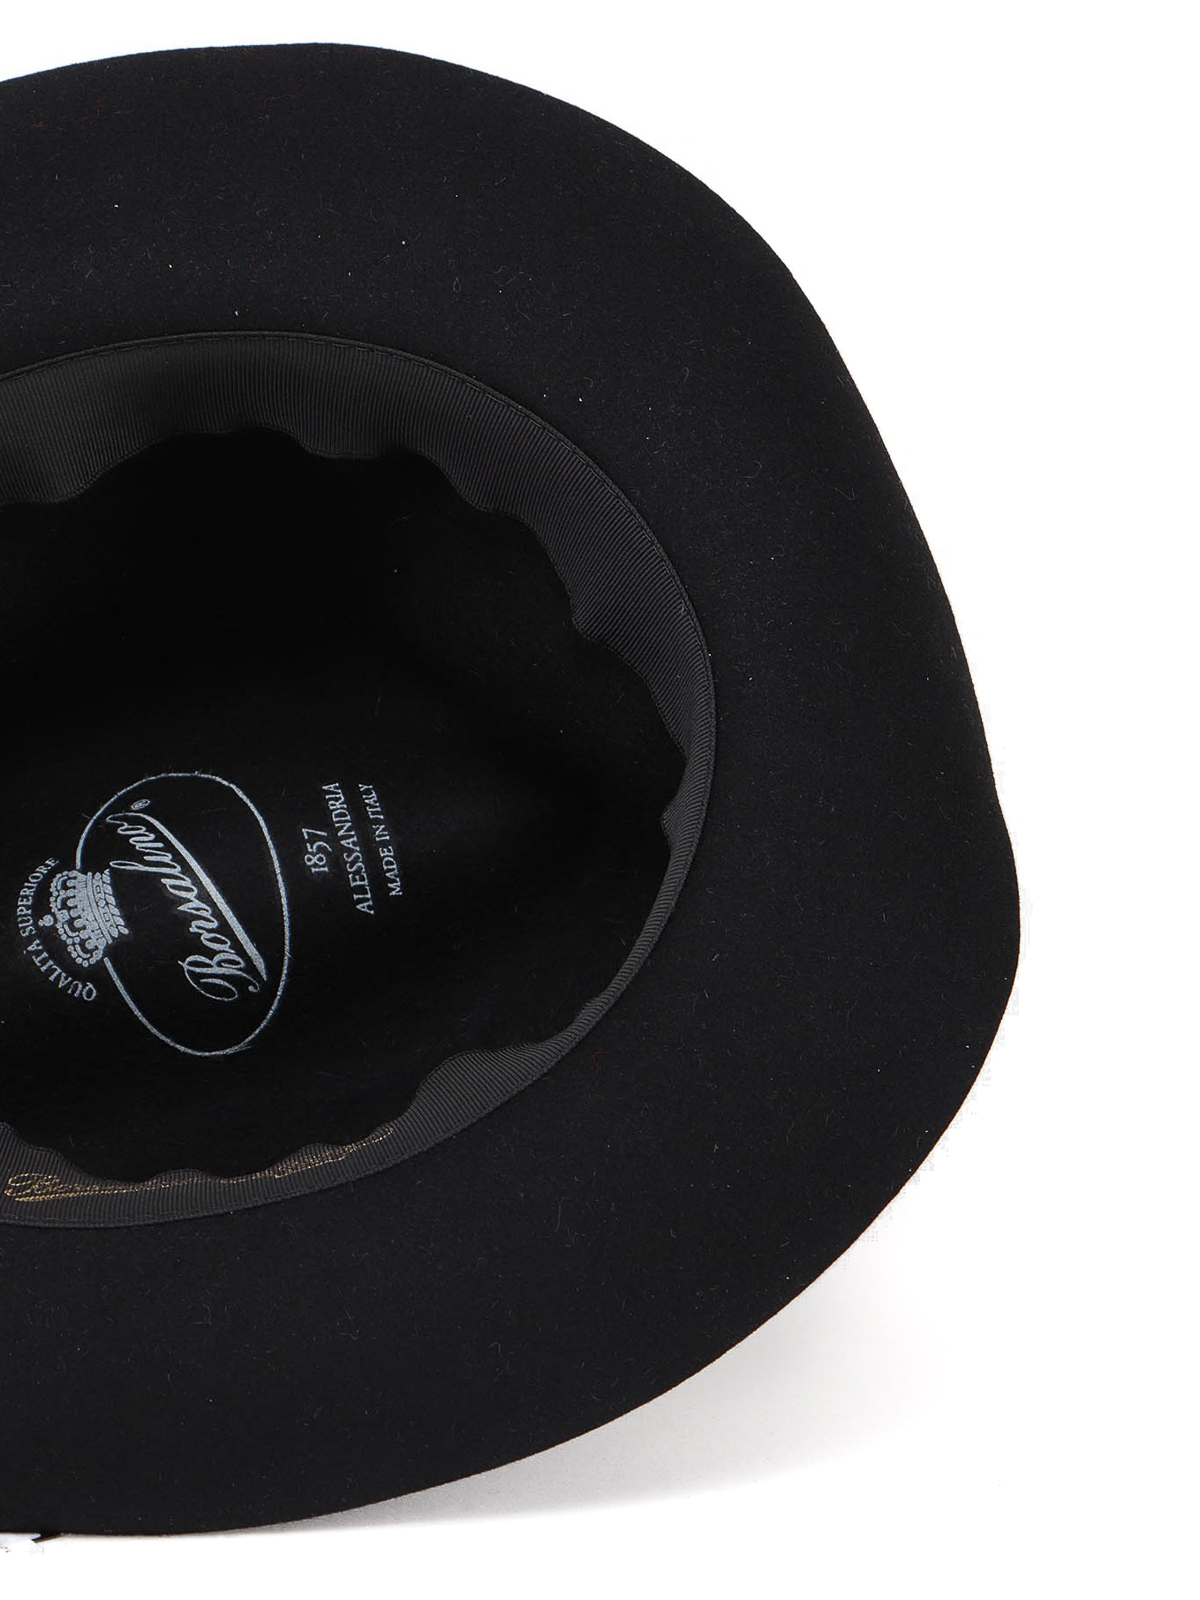 Hats & caps Borsalino - Monica black felt hat - 2130240421